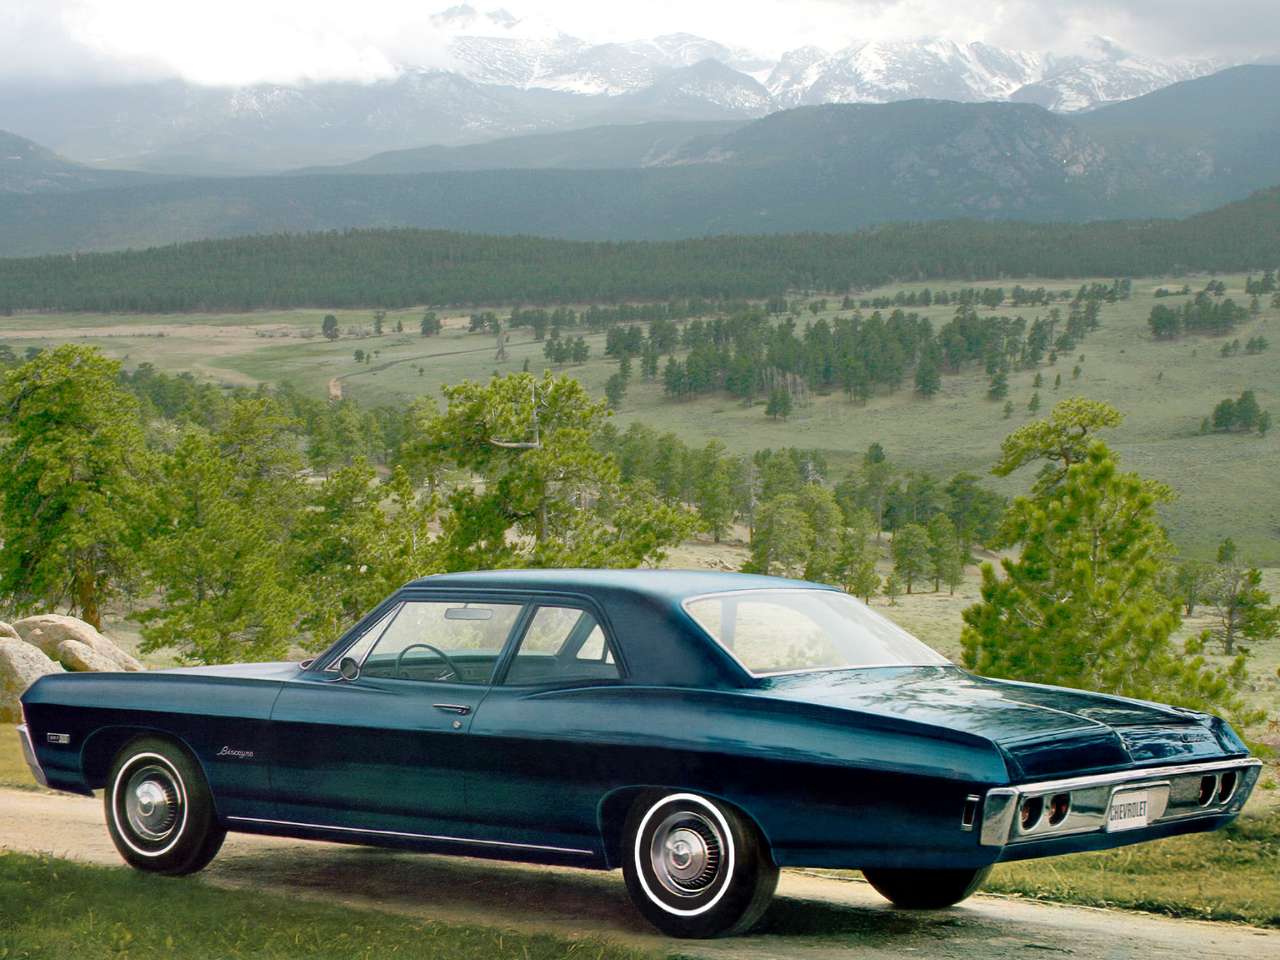 1968 Chevrolet Biscayne 2-door sedan quebra-cabeças online